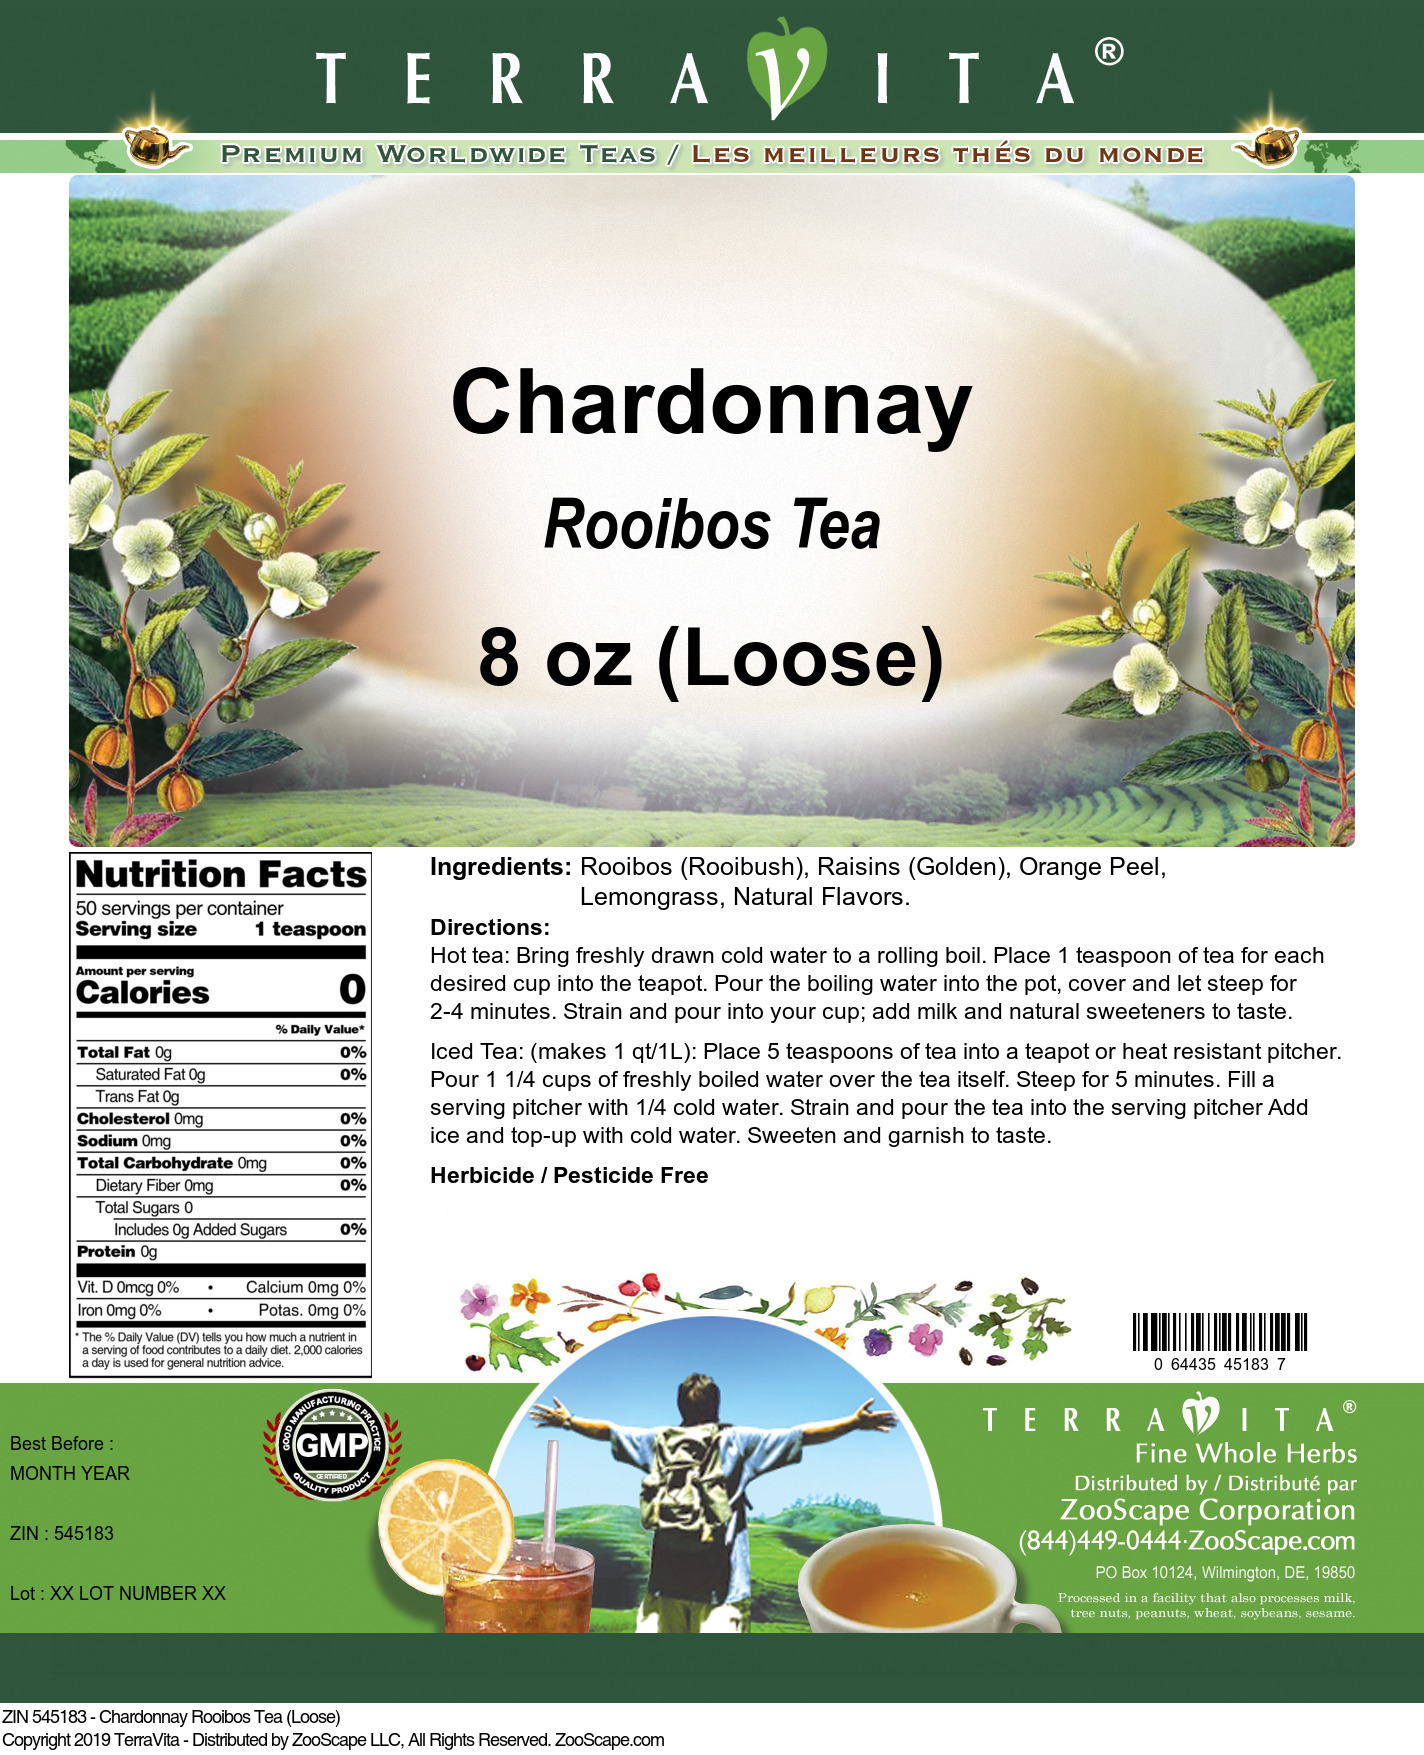 Chardonnay Rooibos Tea (Loose) - Label